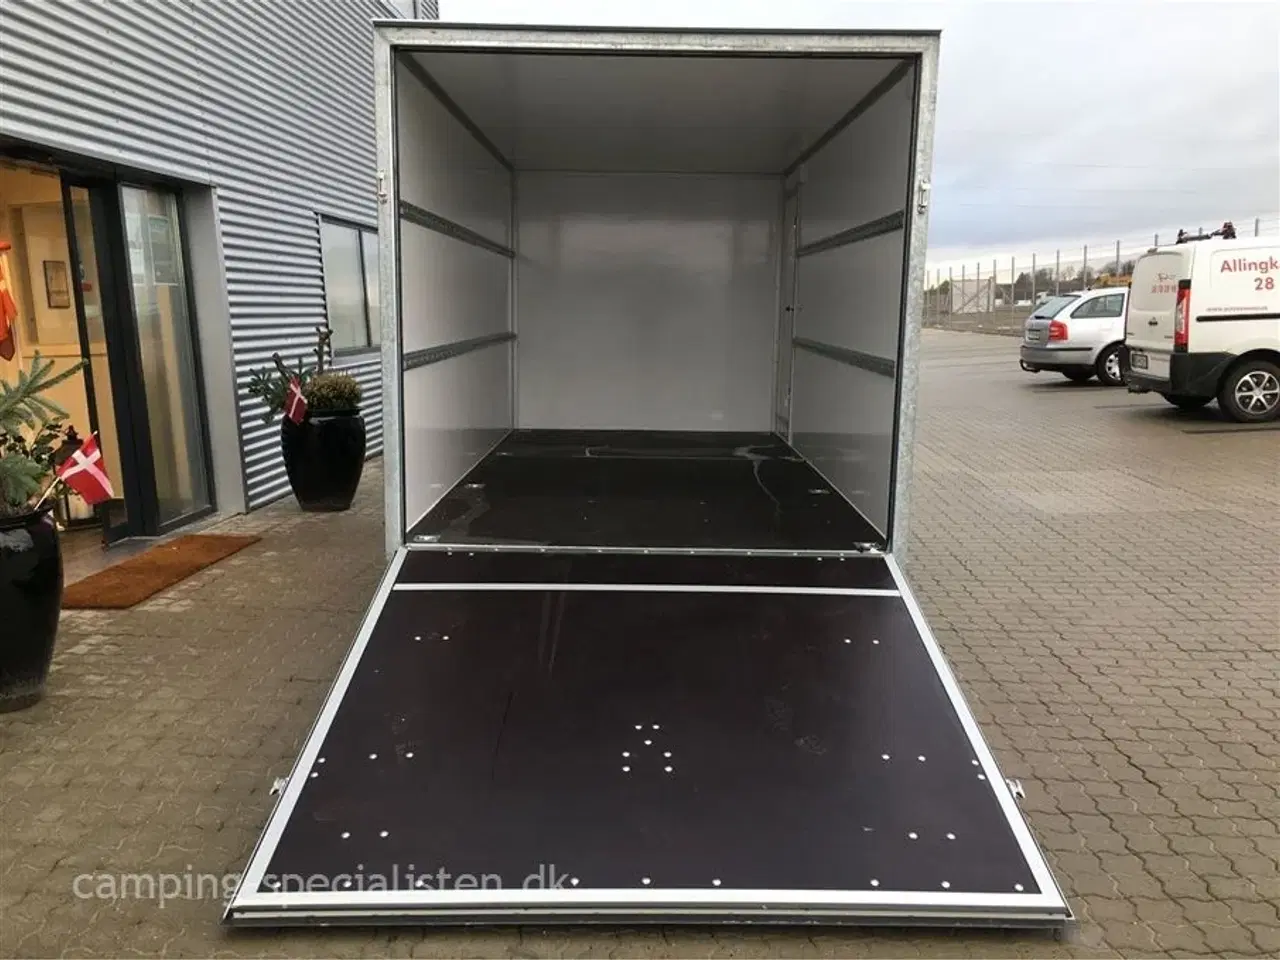 Billede 4 - 2024 - Selandia Cargotrailer Stor 2541 HT 2500 kg    Ny Cargo trailer 2*4 meter Model 2024  Camping-Specialisten.dk Silkeborg og Arhus